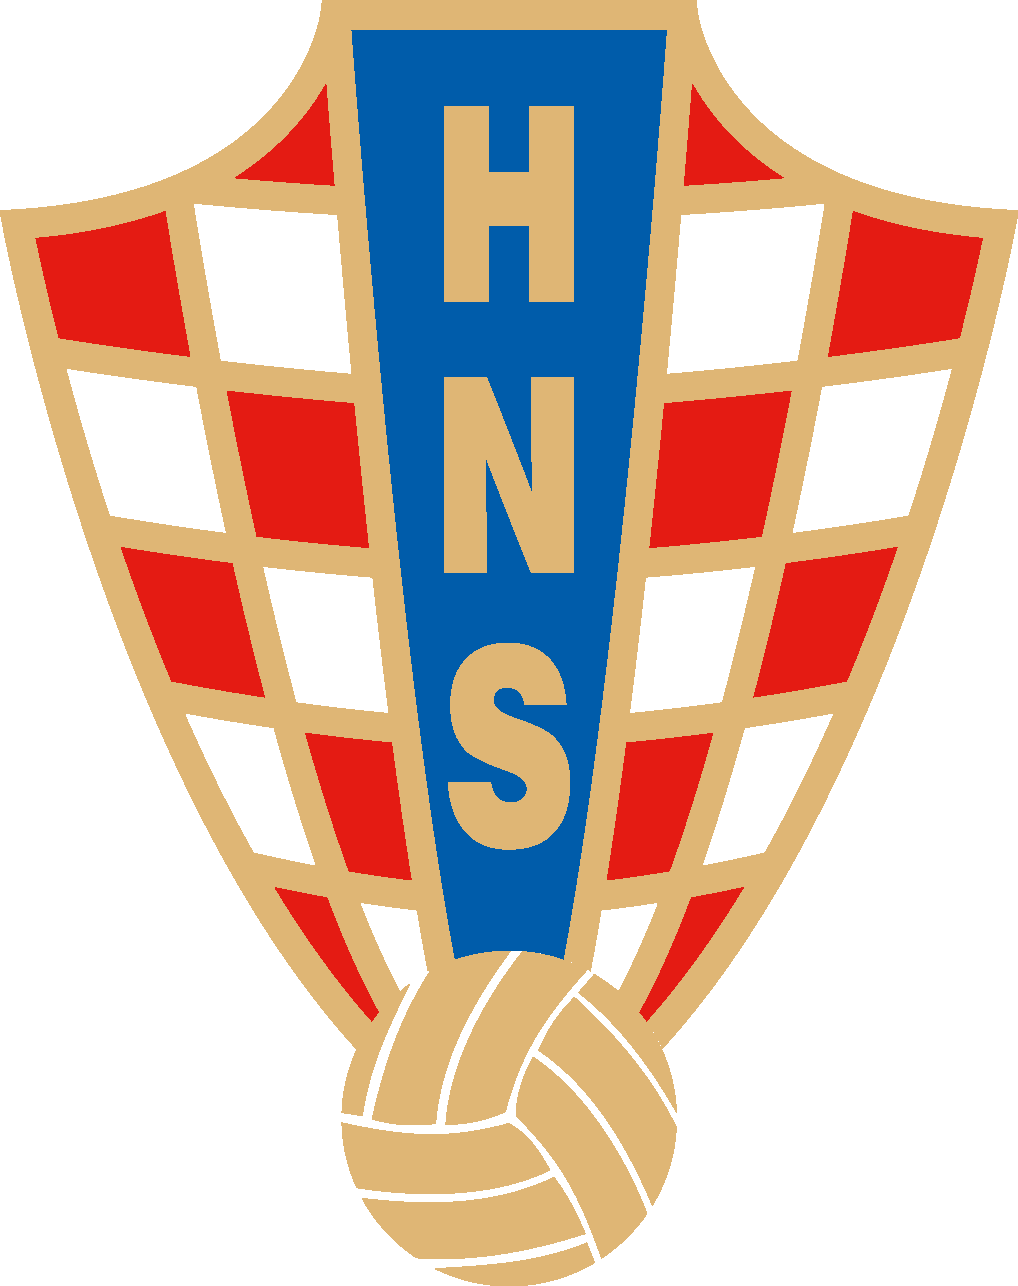 Croatian Football Federation & Croatia National Football Team Logo